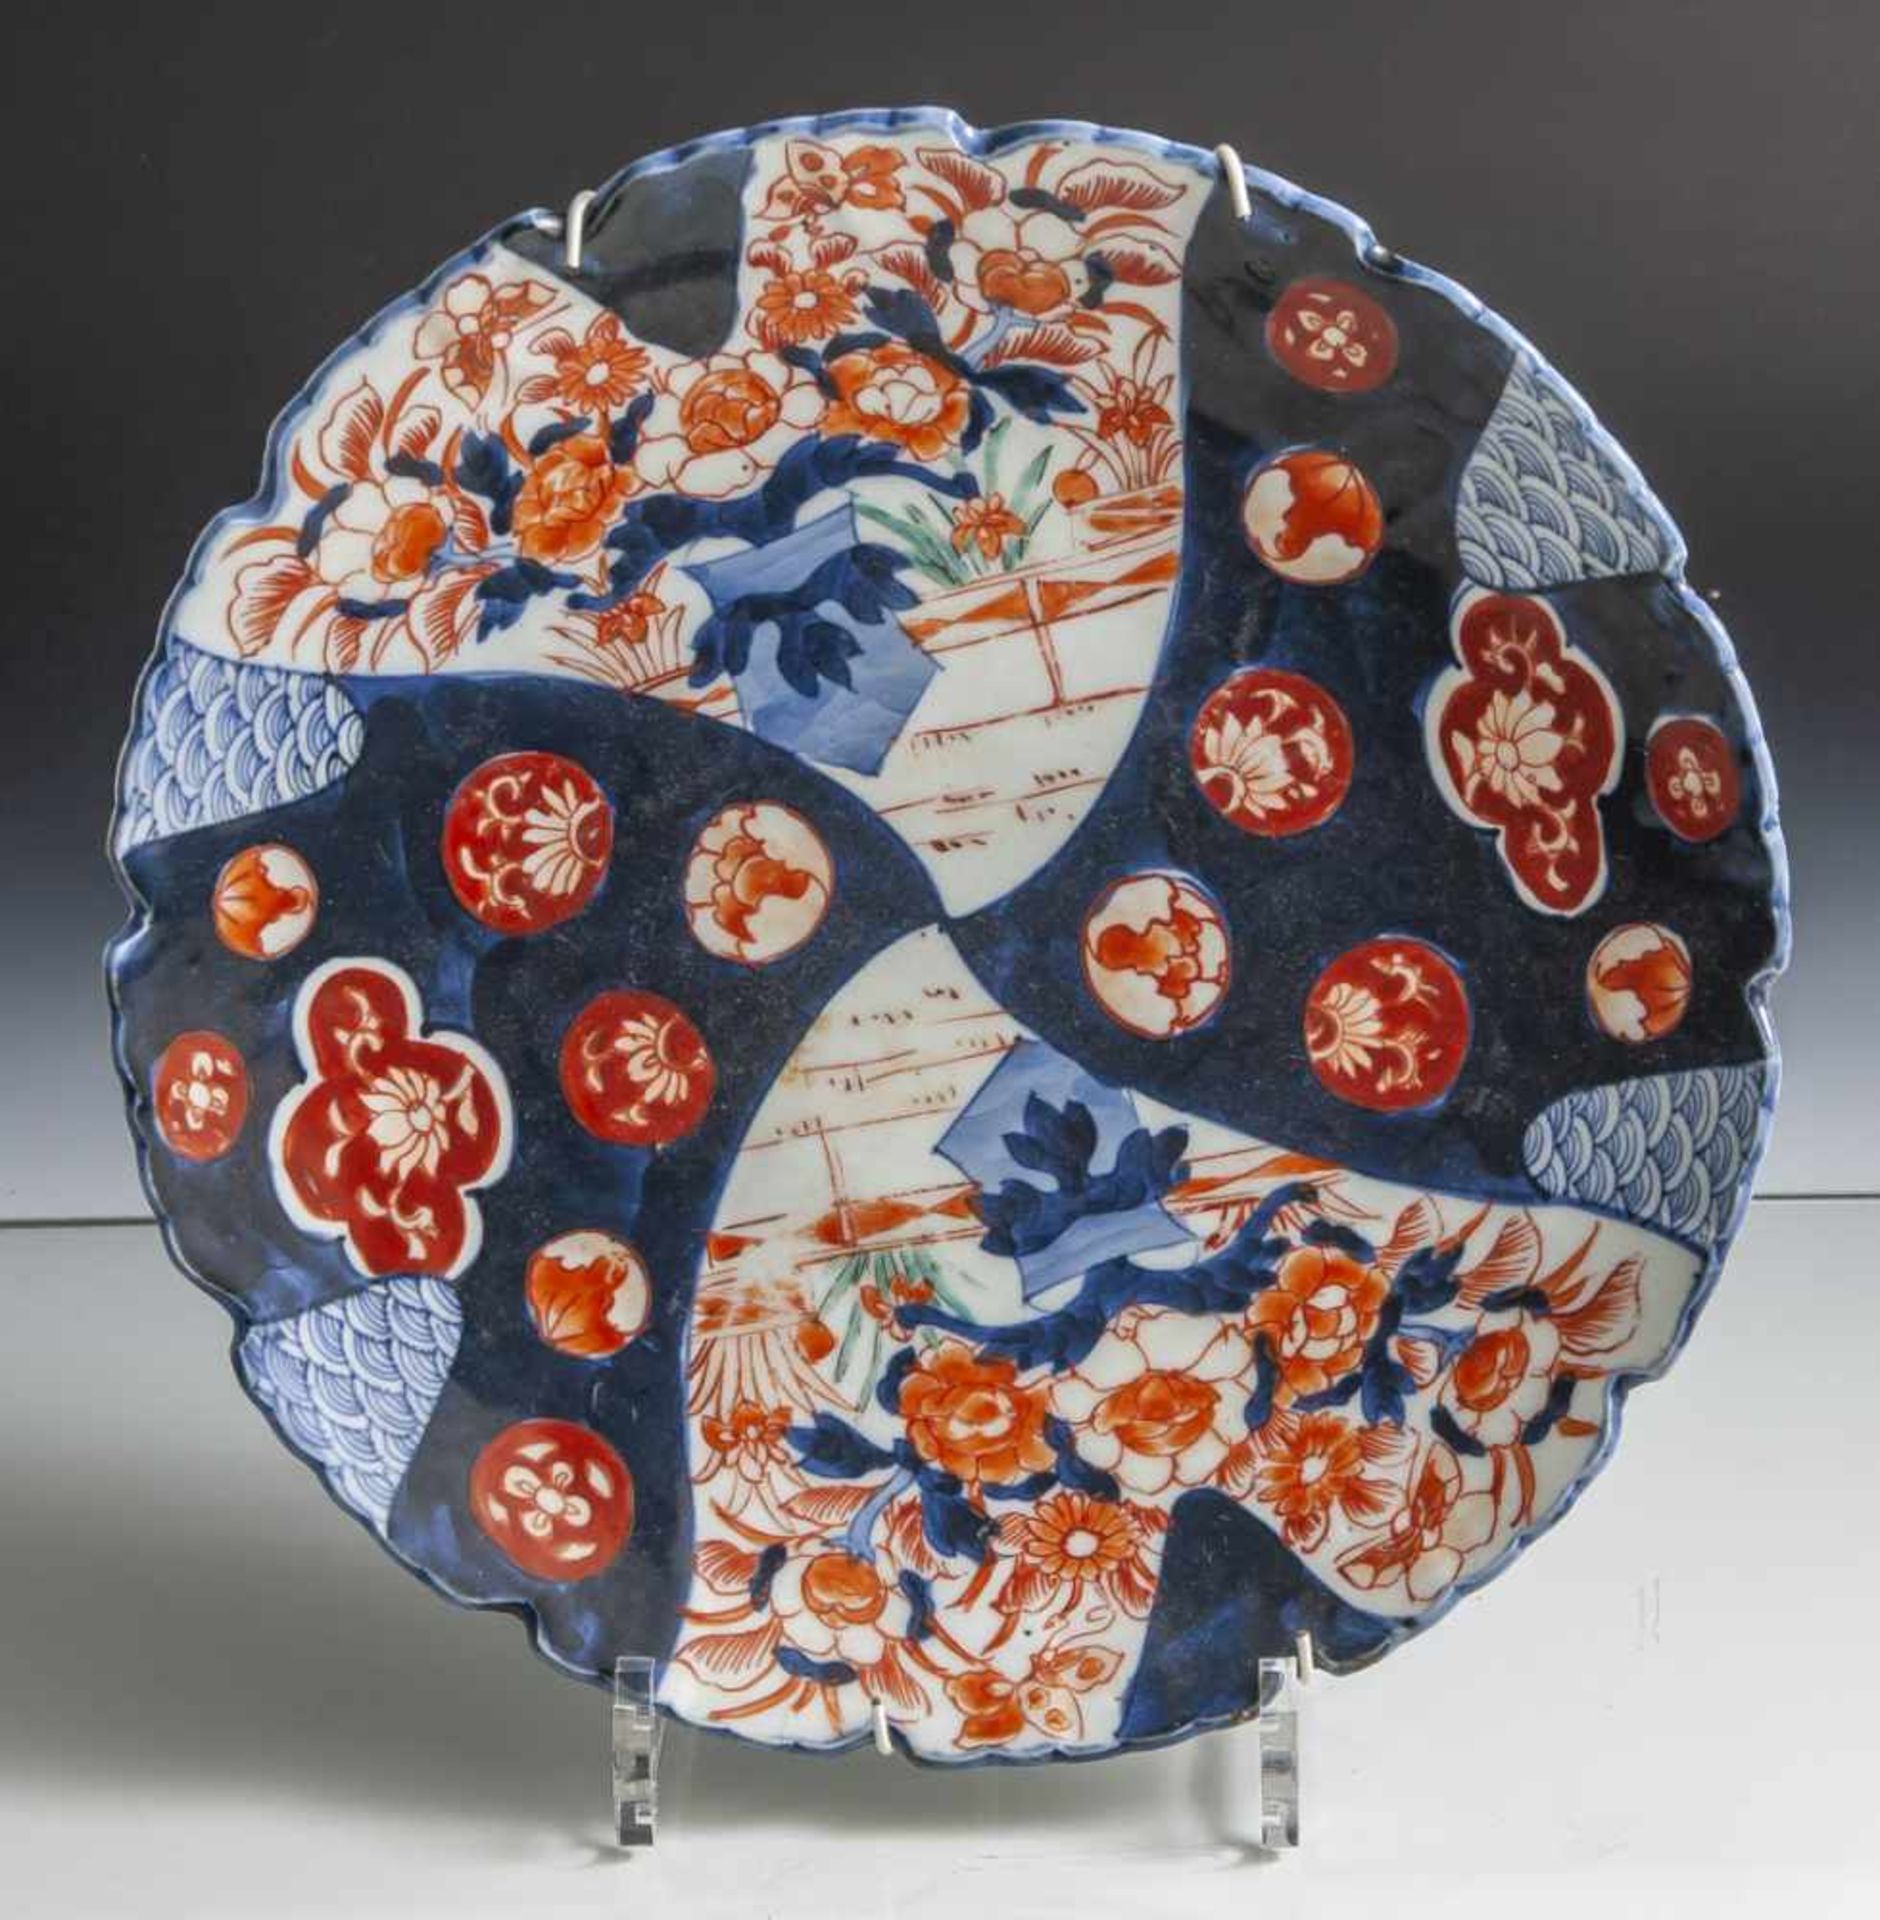 Imari-Teller, Japan, wohl Anfang 20. Jahrhundert, Porzellan mit unterglasurblauem Fond, polychrome